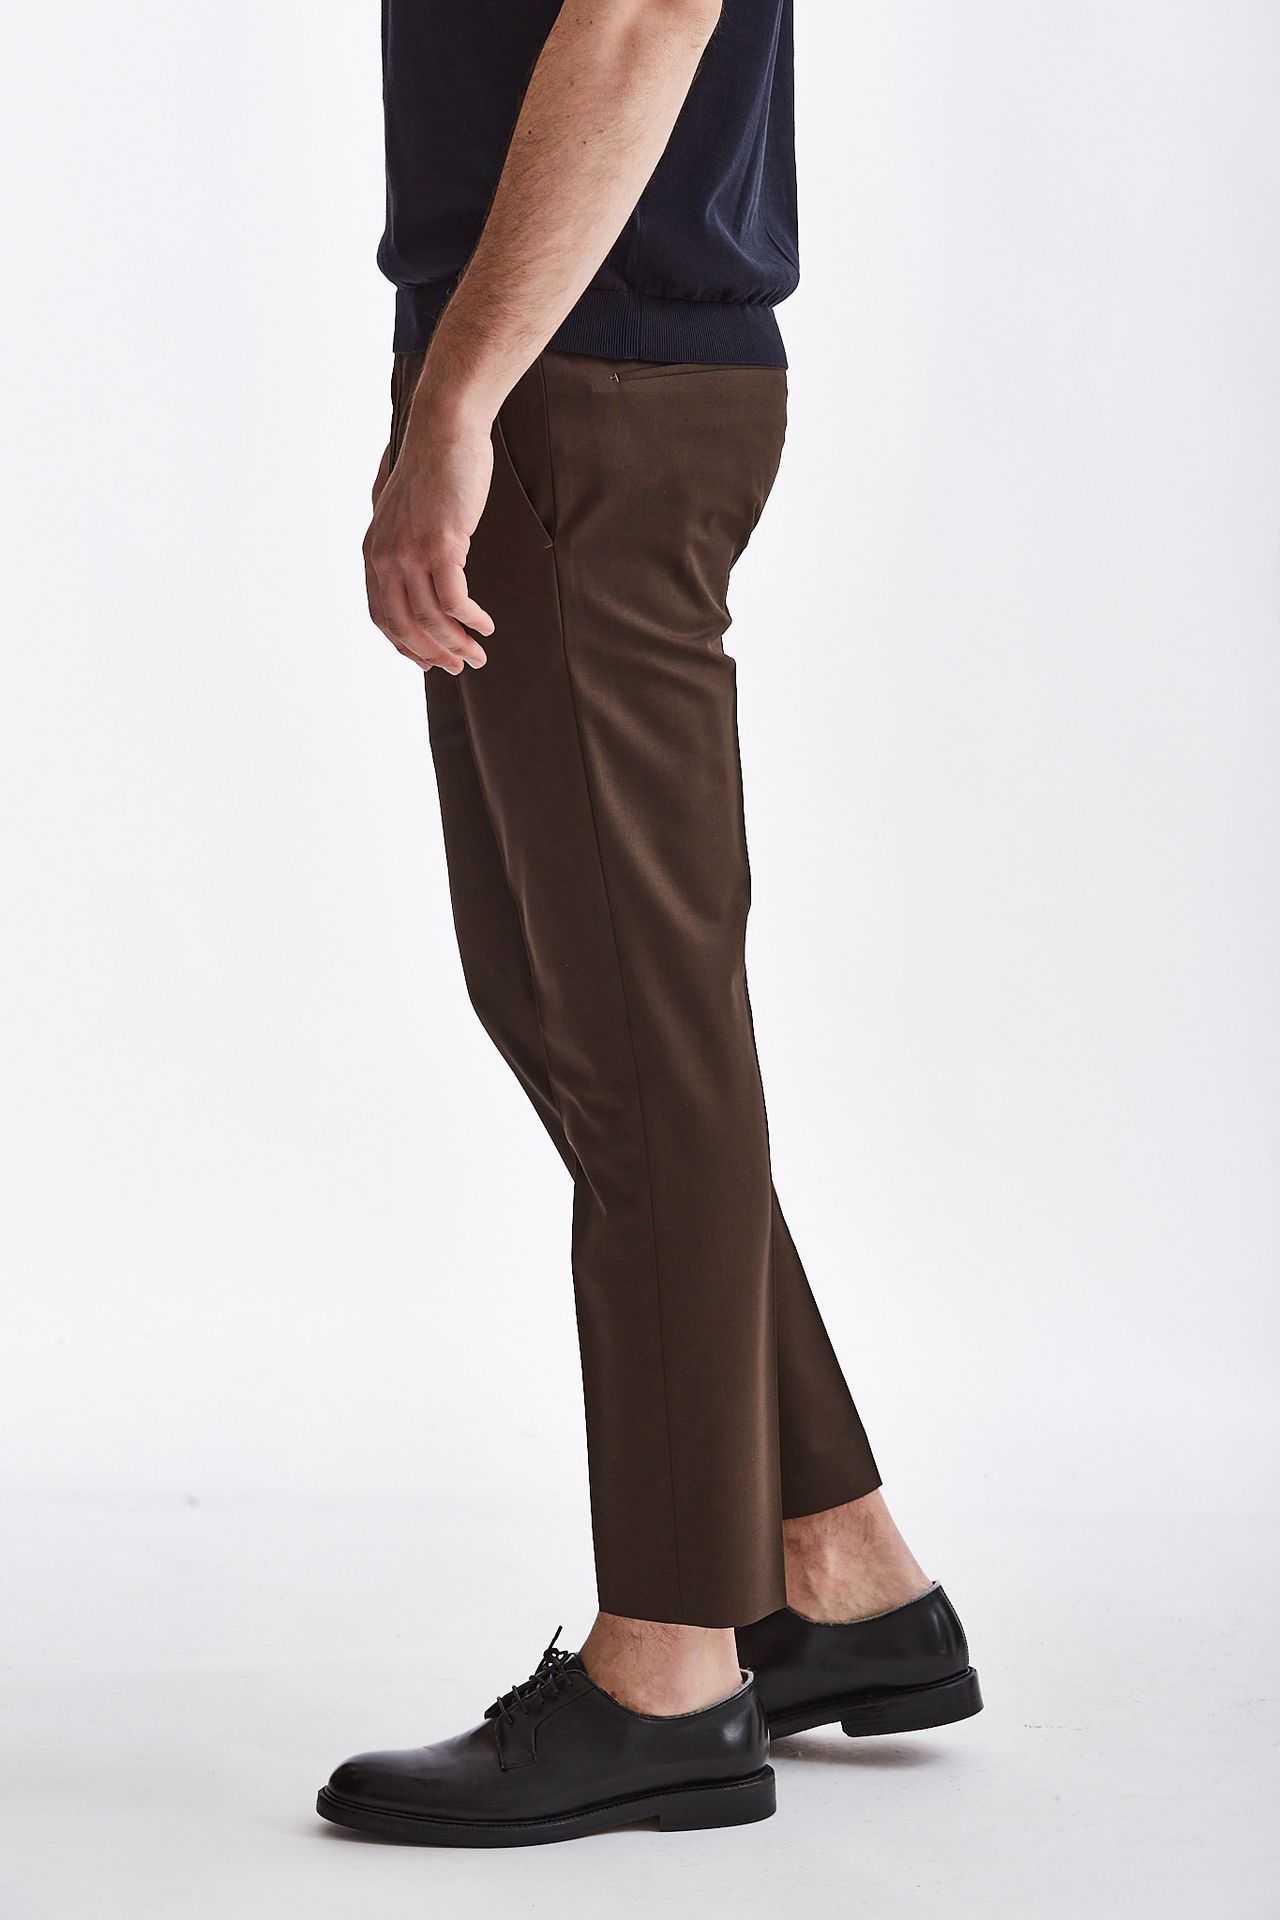 Pantalone EDGE-DIECI lana marrone